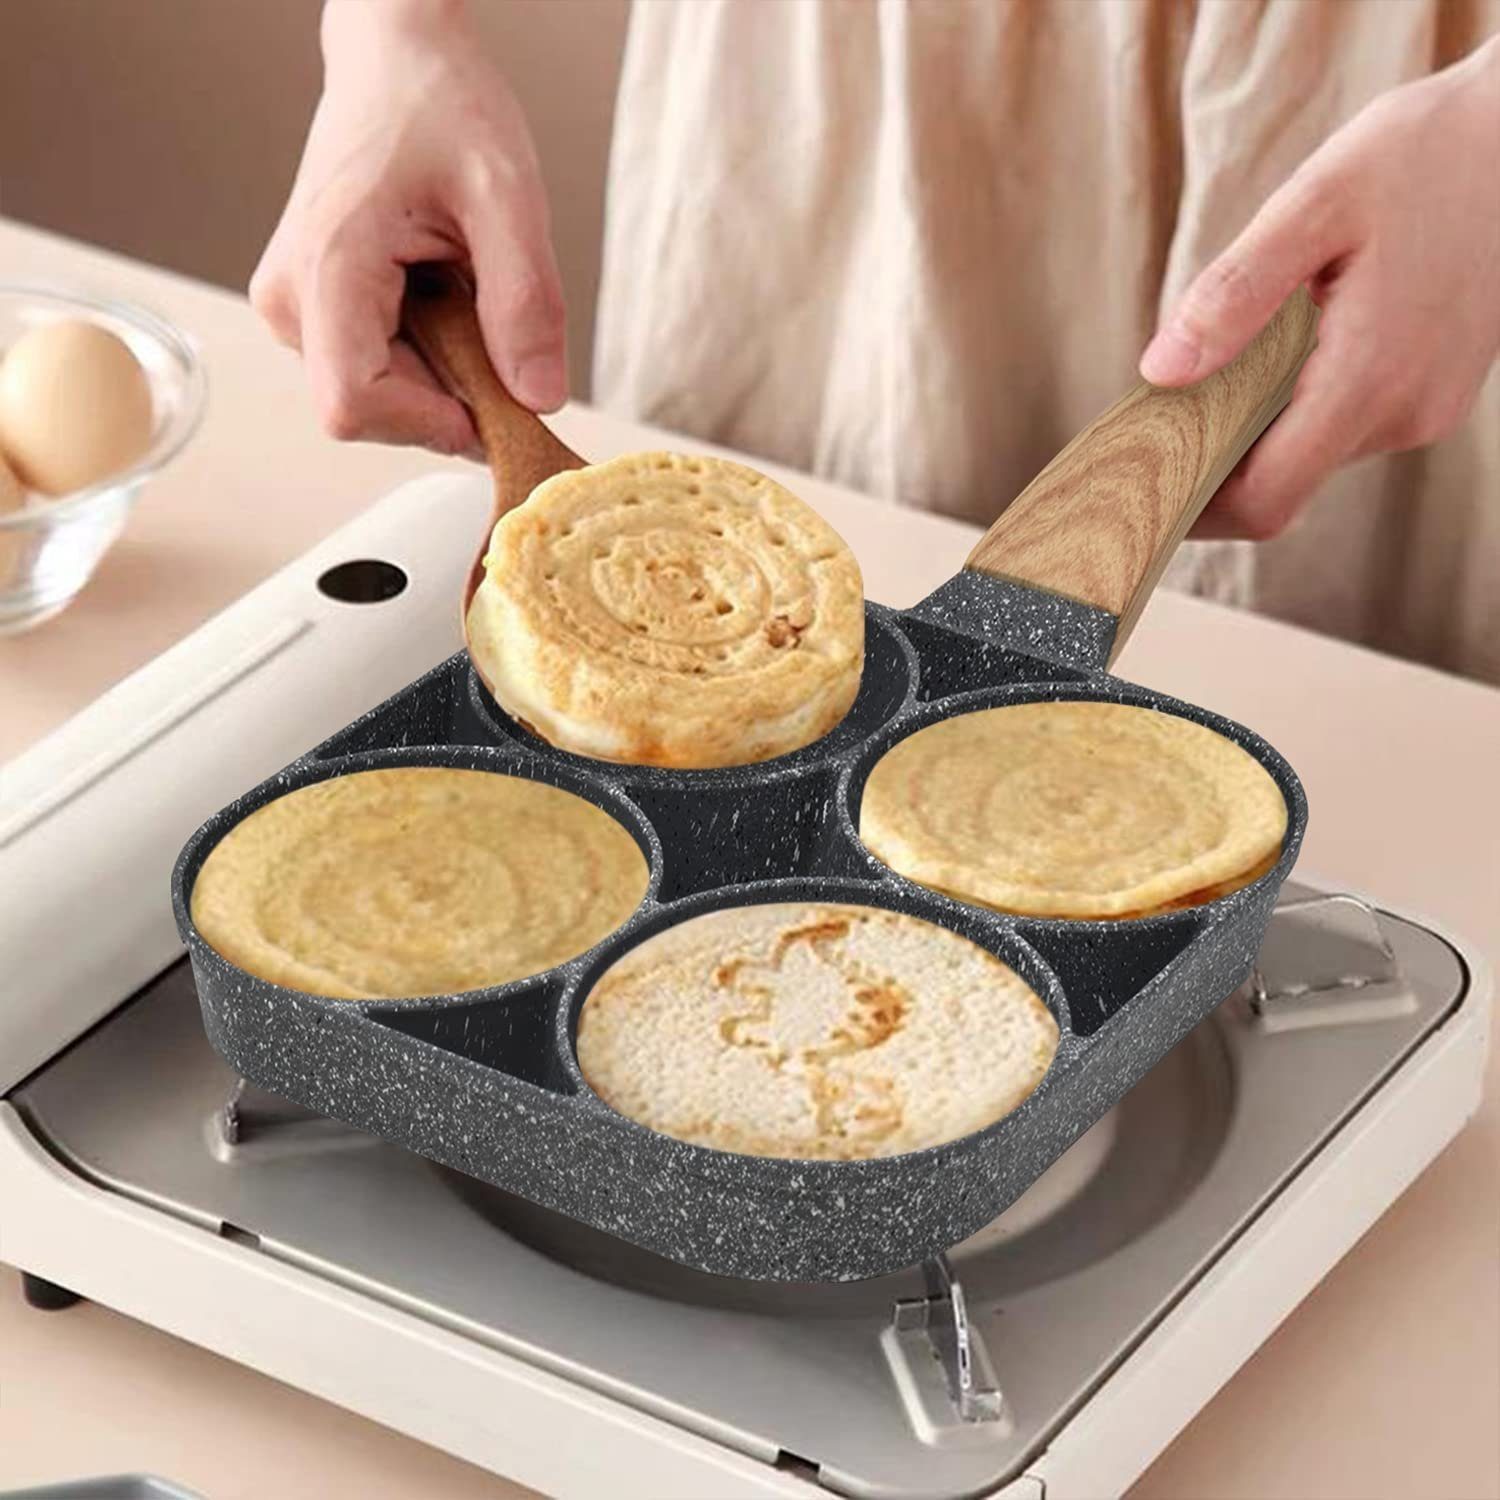 JOEJI’S KITCHEN Pan Induktion Frying Crêpepfanne Pfanne Pancake - Pfannkuchenpfanne Maker Egg